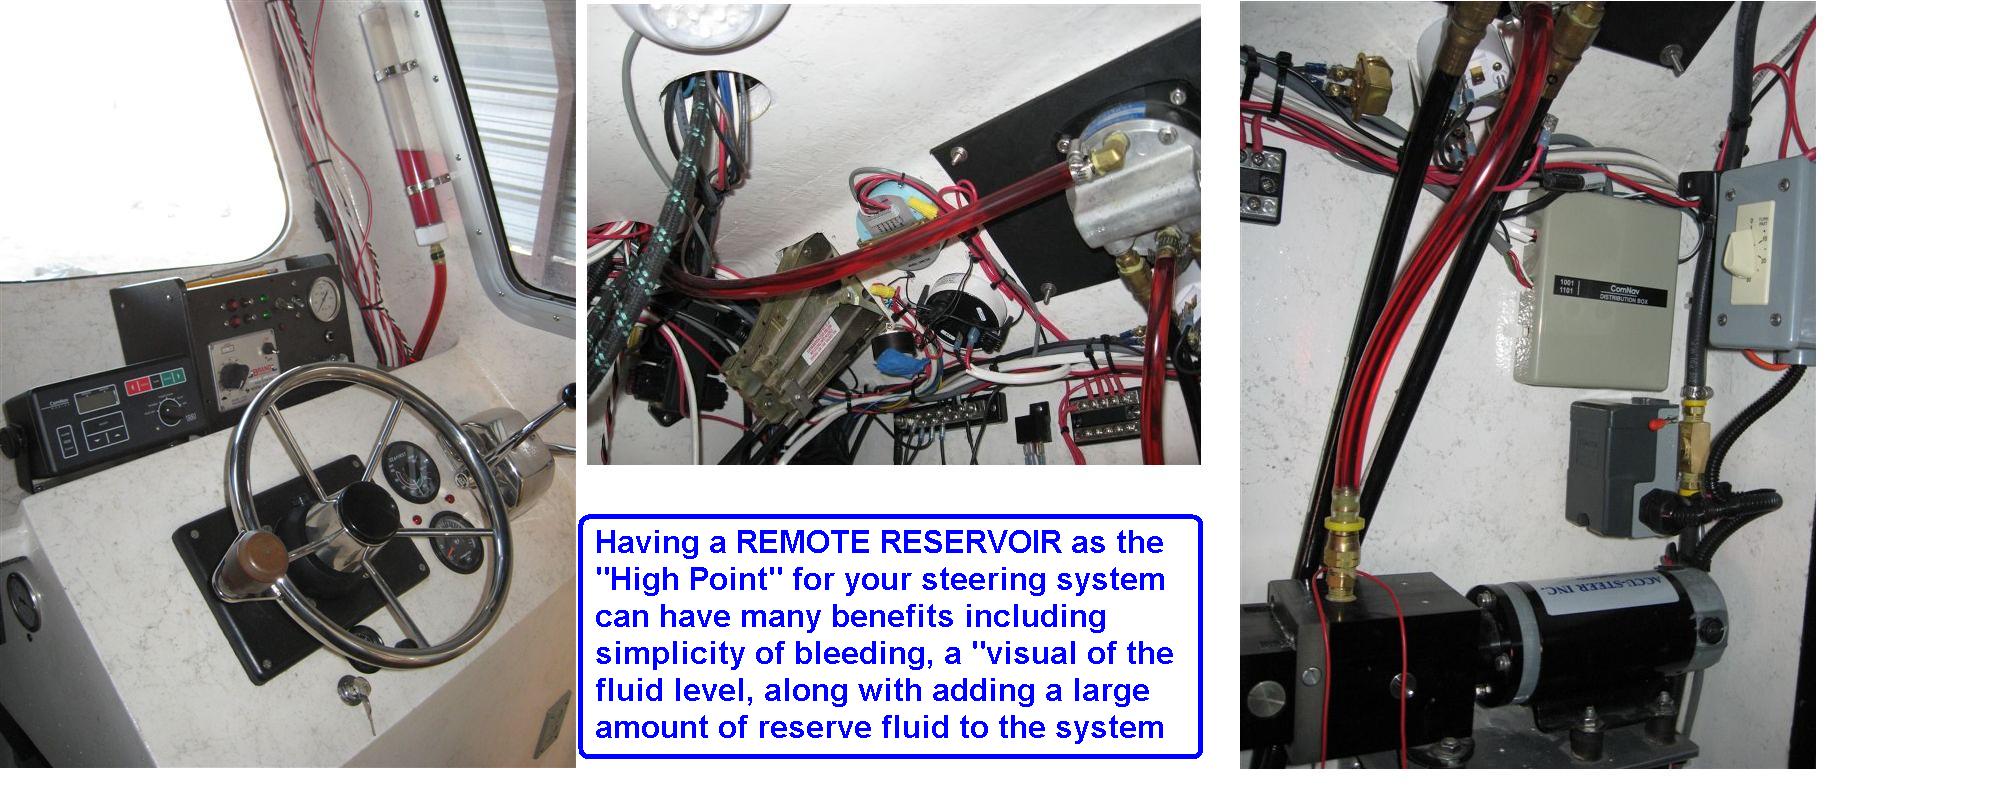 Remote Steering reservoir ideas and plumbing